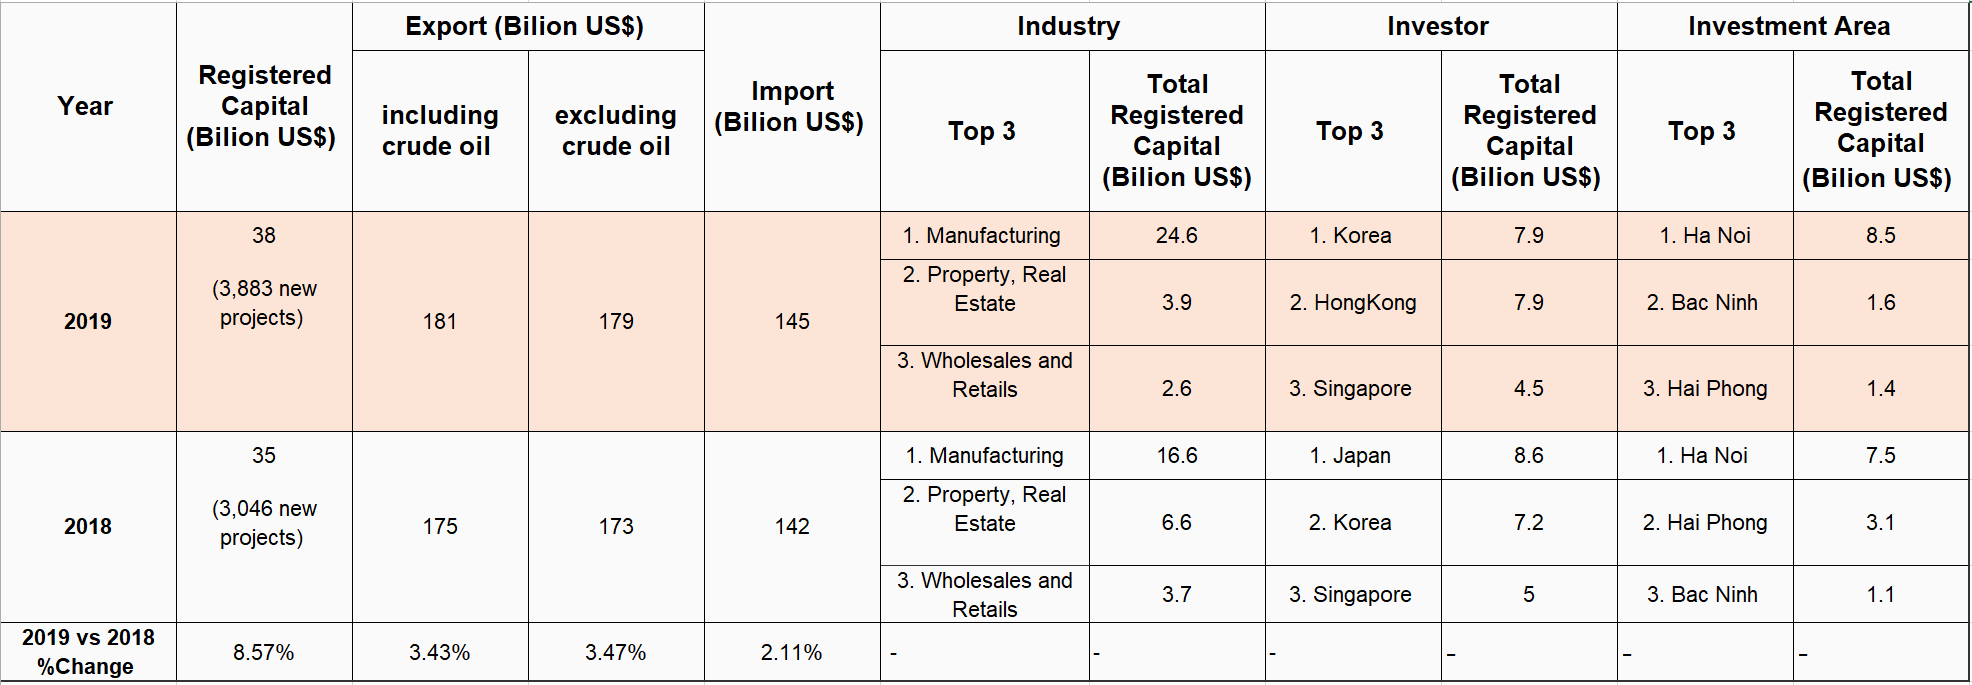 Vietnam investment opportunities - Summary of Vietnam FDI  2019 vs 2018